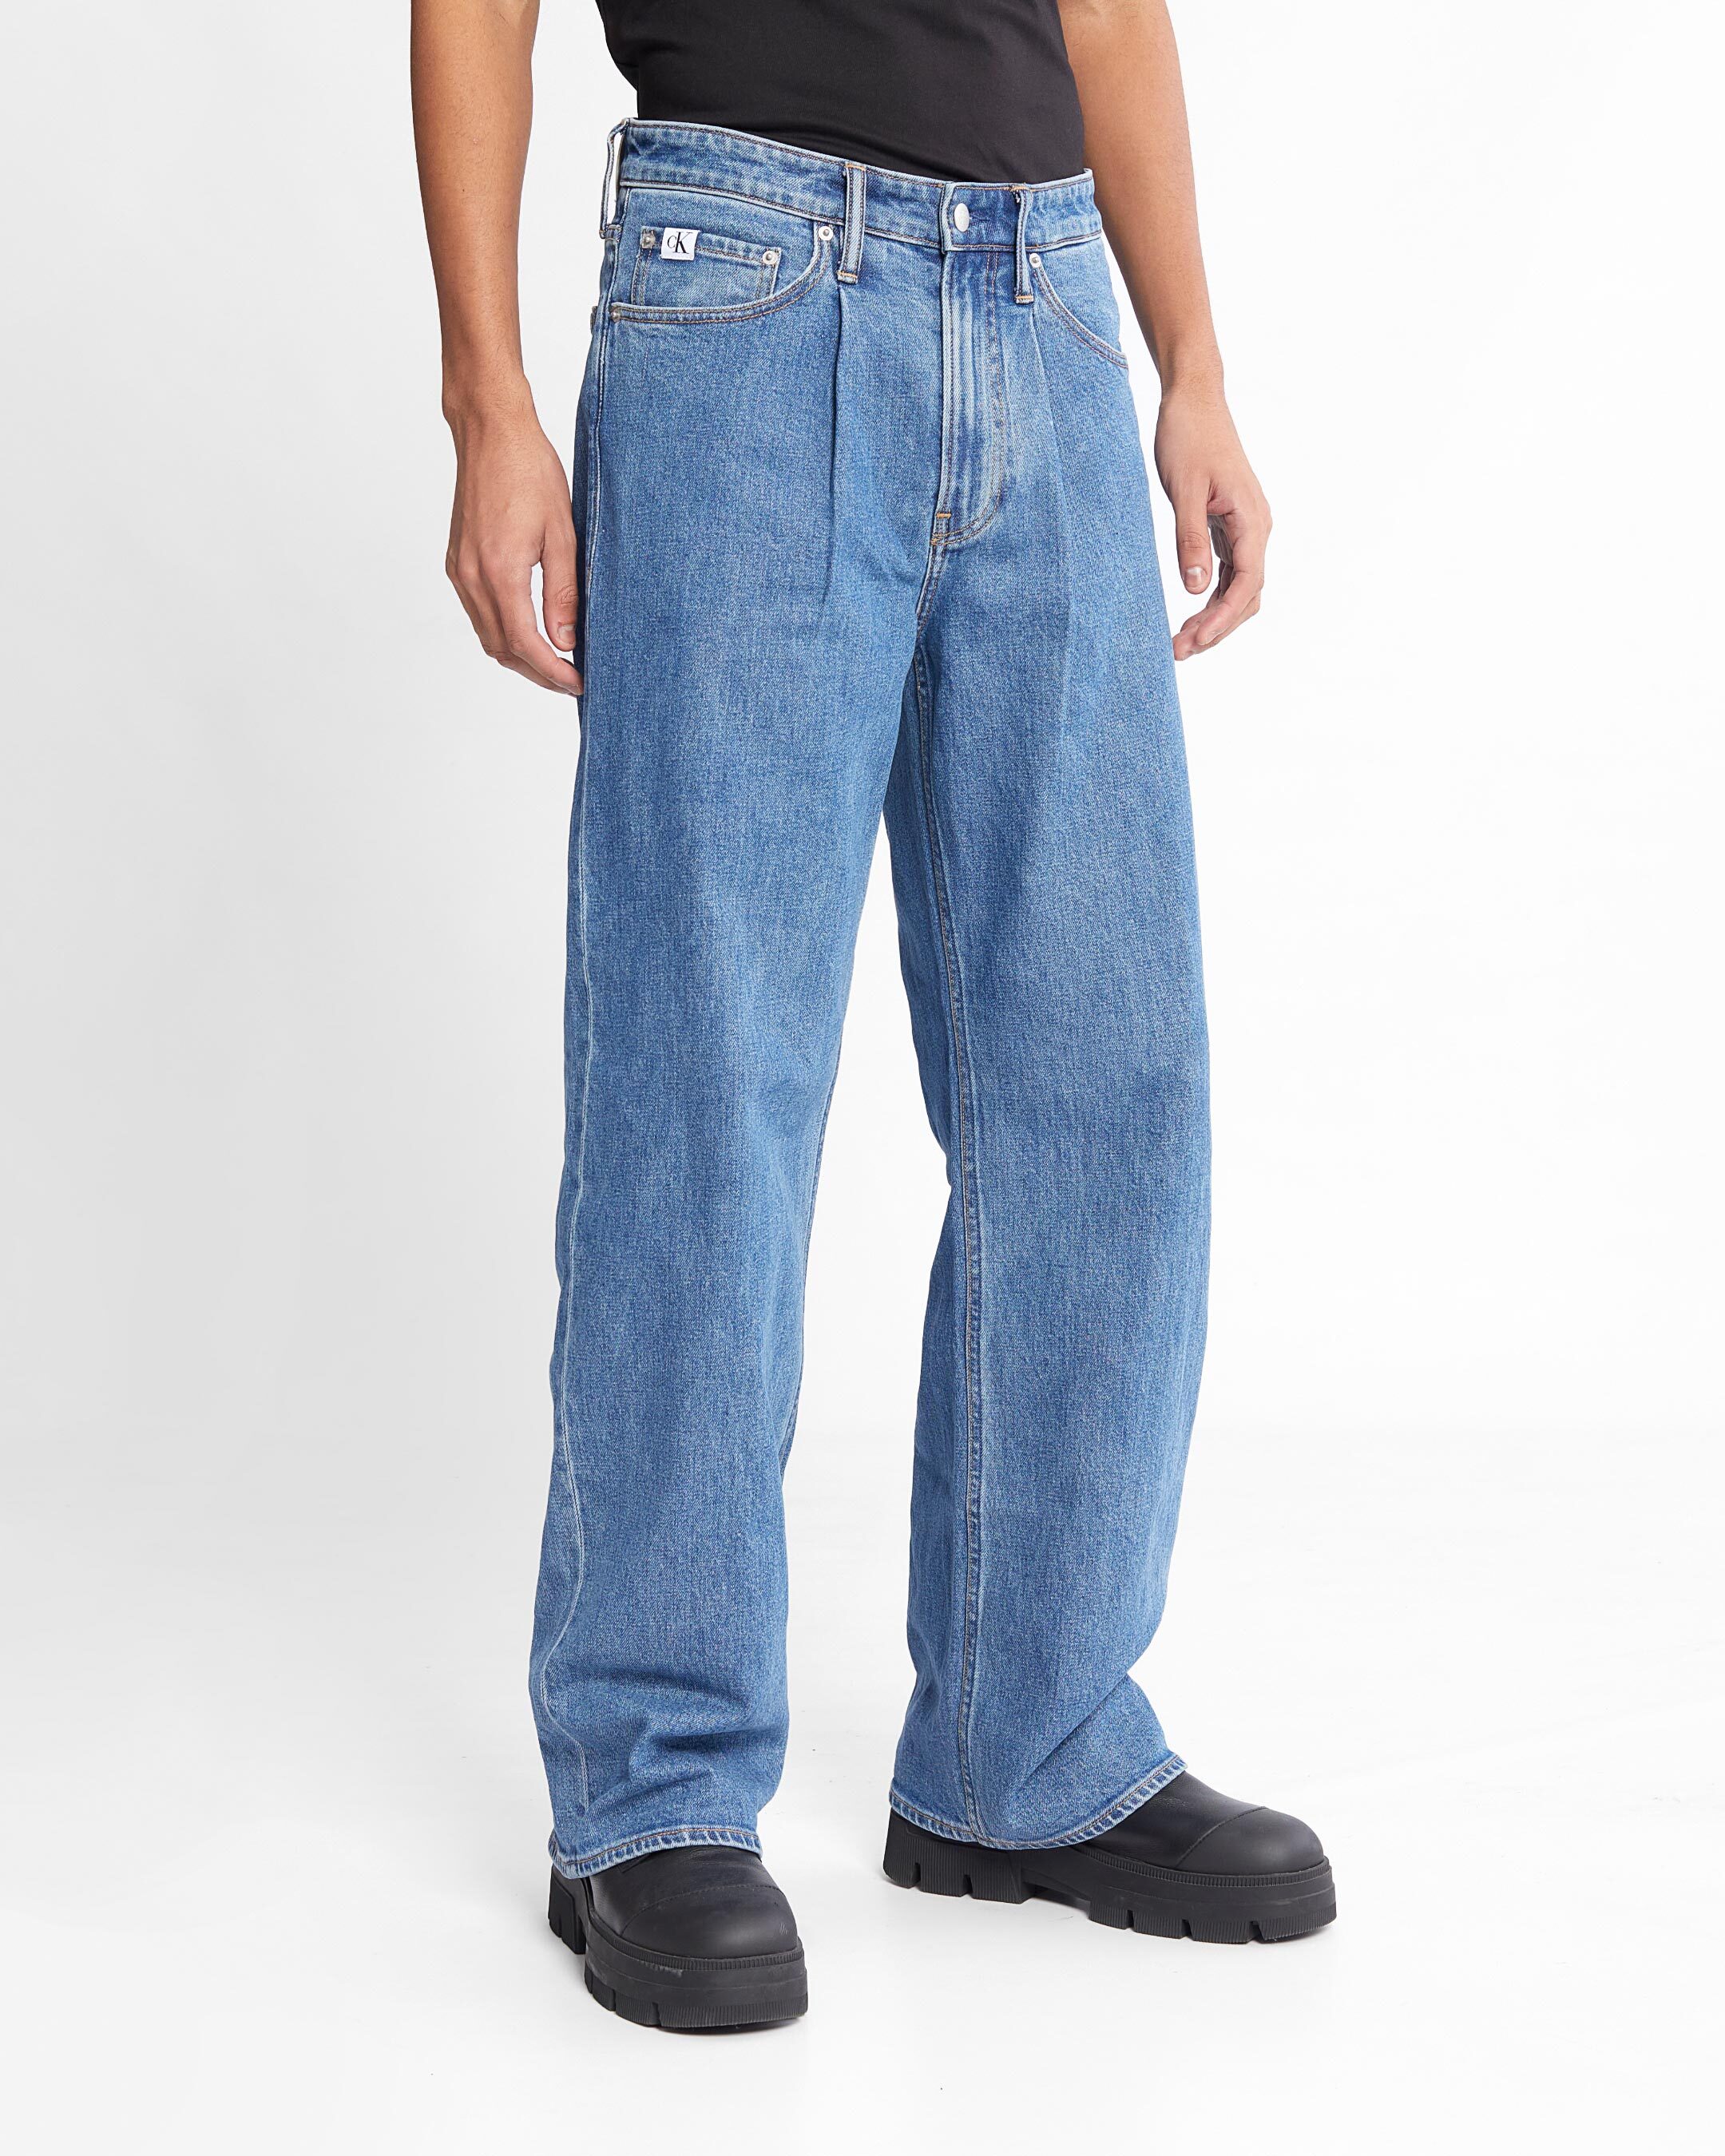 90s Loose Fit Jeans, blue